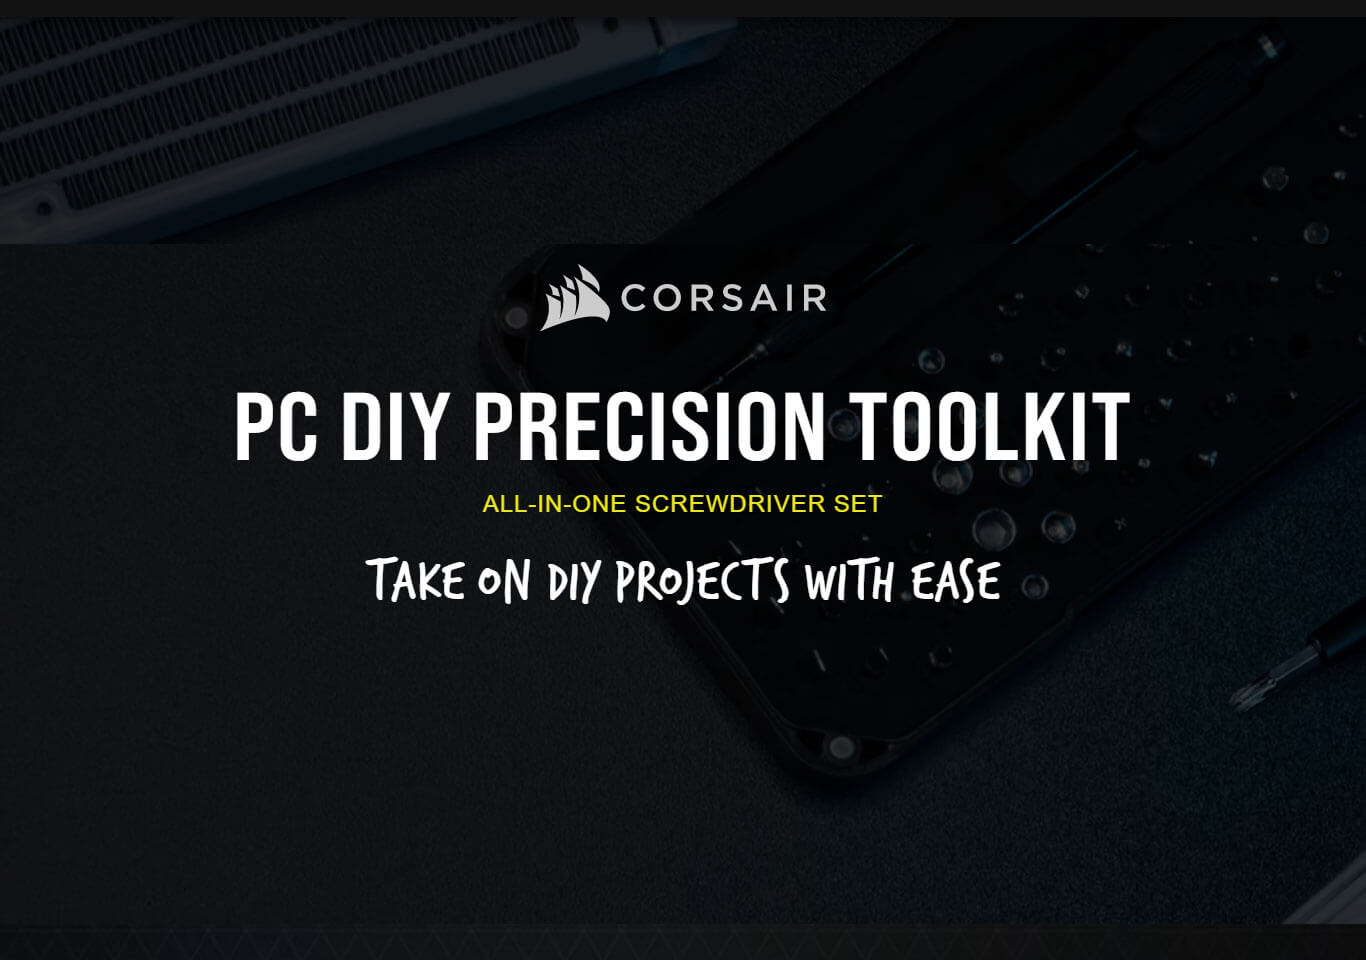 CORSAIR PC DIY PRECISION TOOLKIT